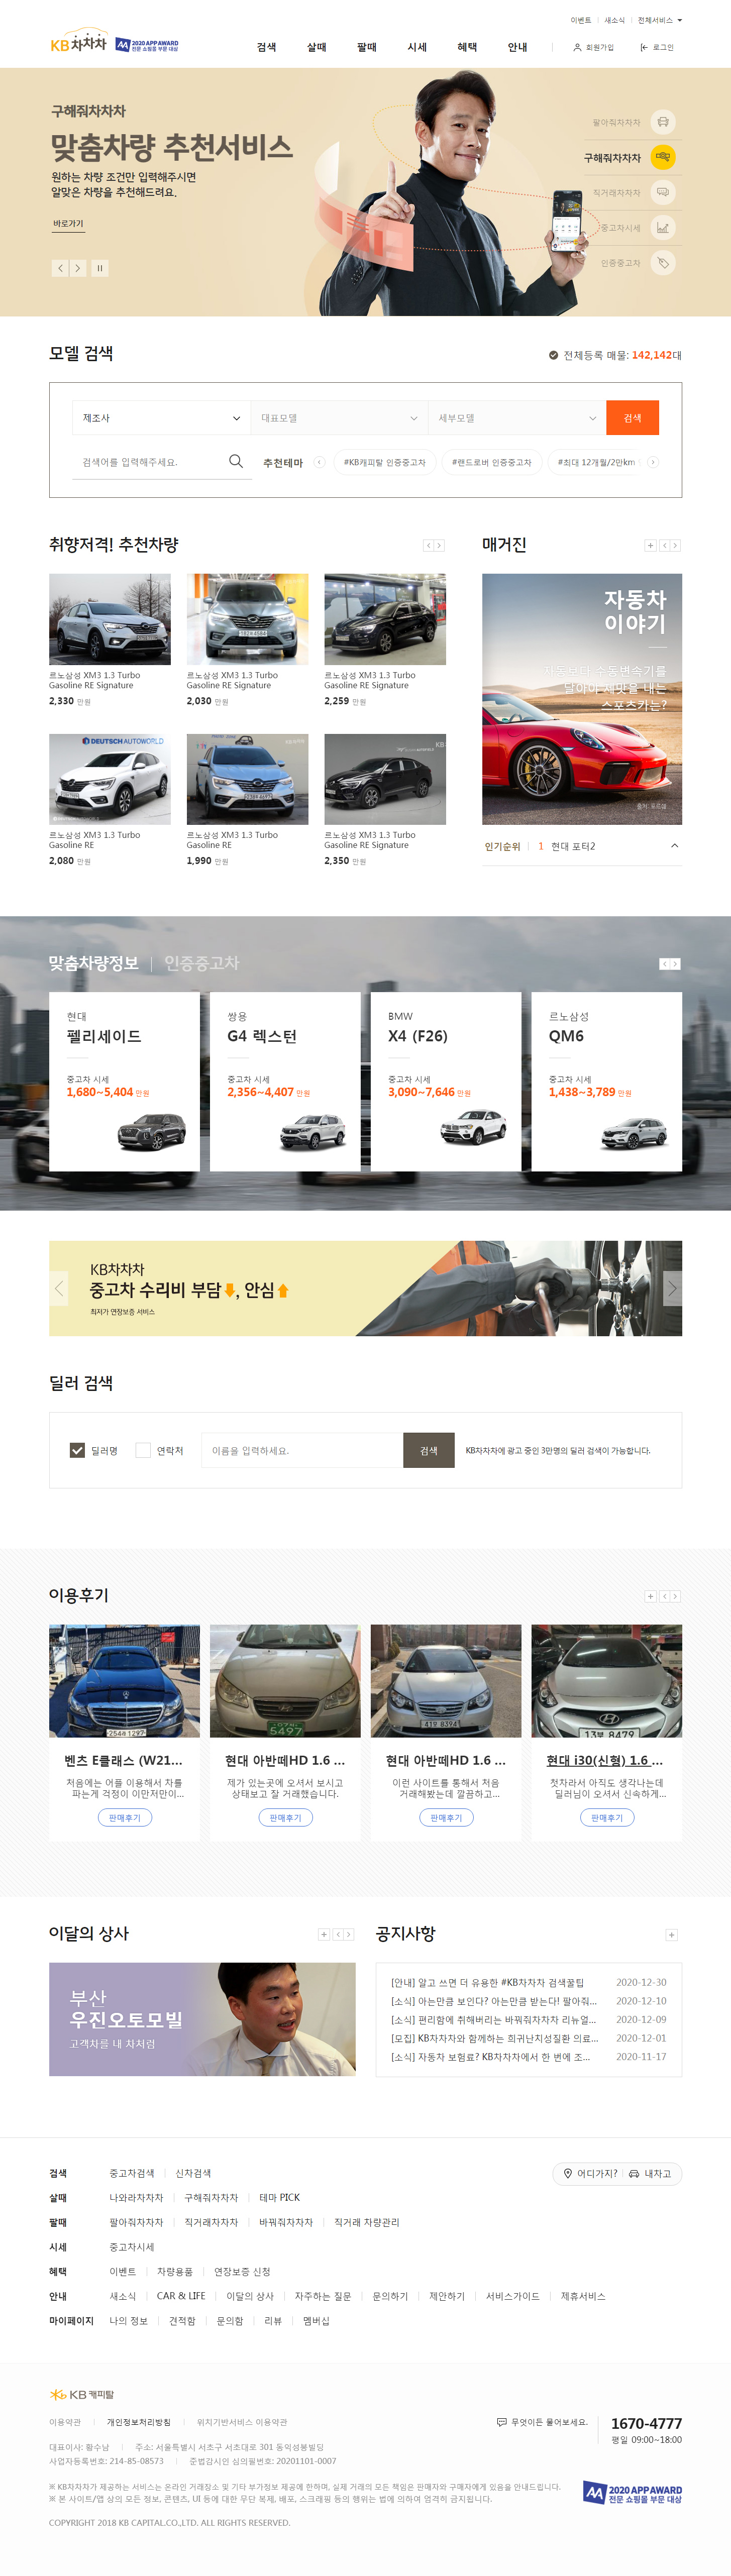 KB chacha韩国二手车平台网站设计